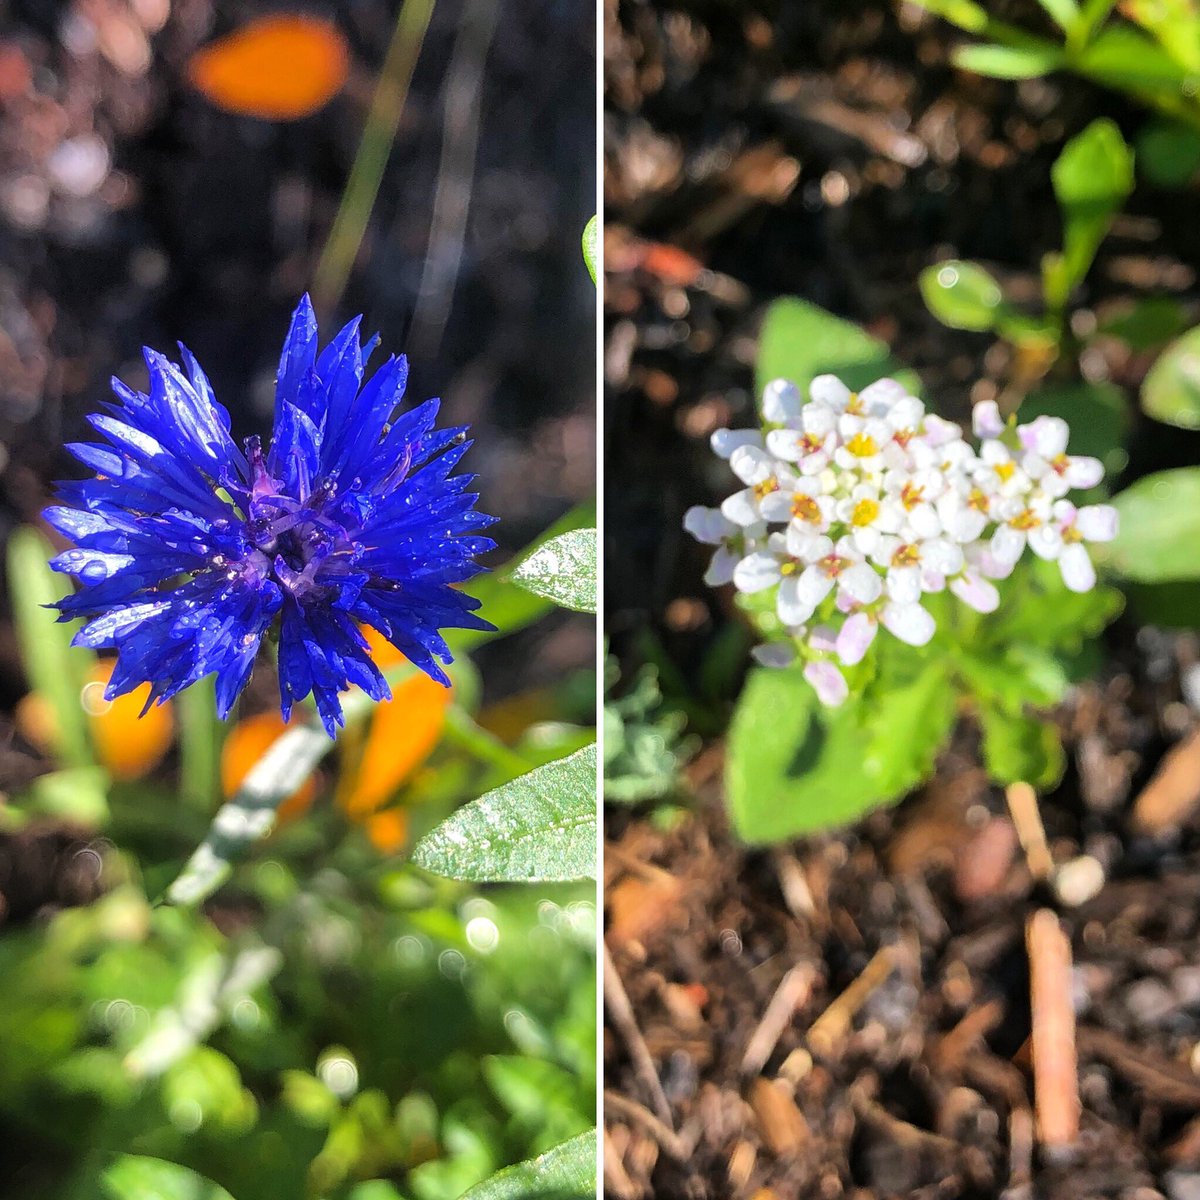 Couple new pretties in the #wildflowergarden today.🦋🐝🌺